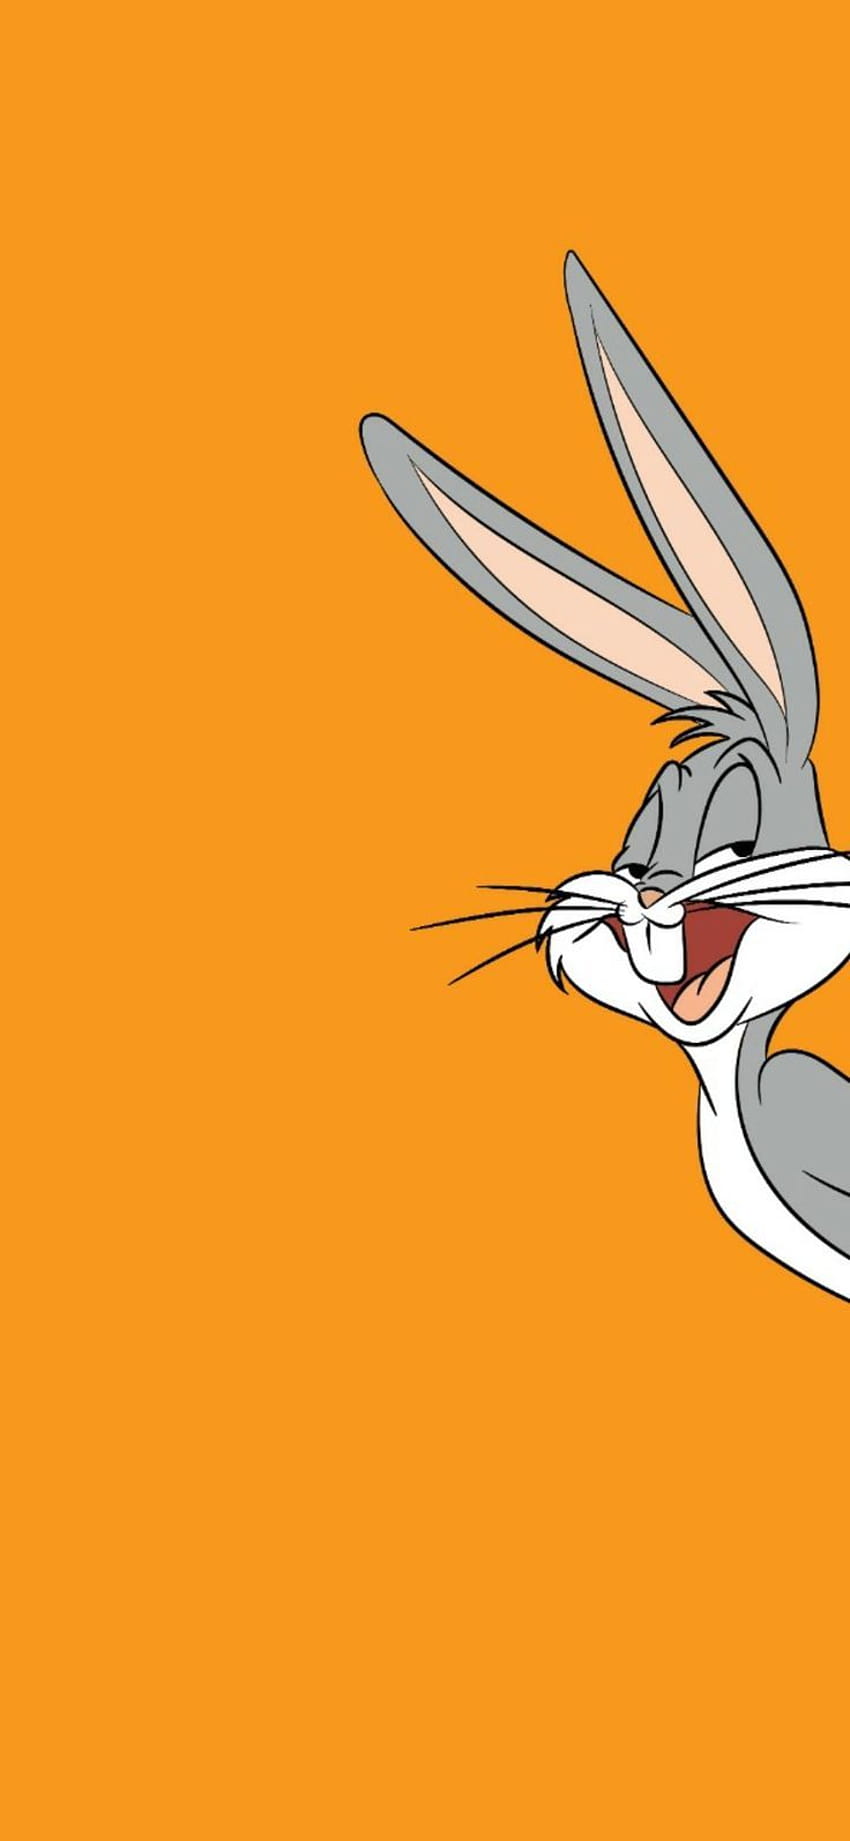 Serie de extinción: Bugs Bunny fondo de pantalla del teléfono